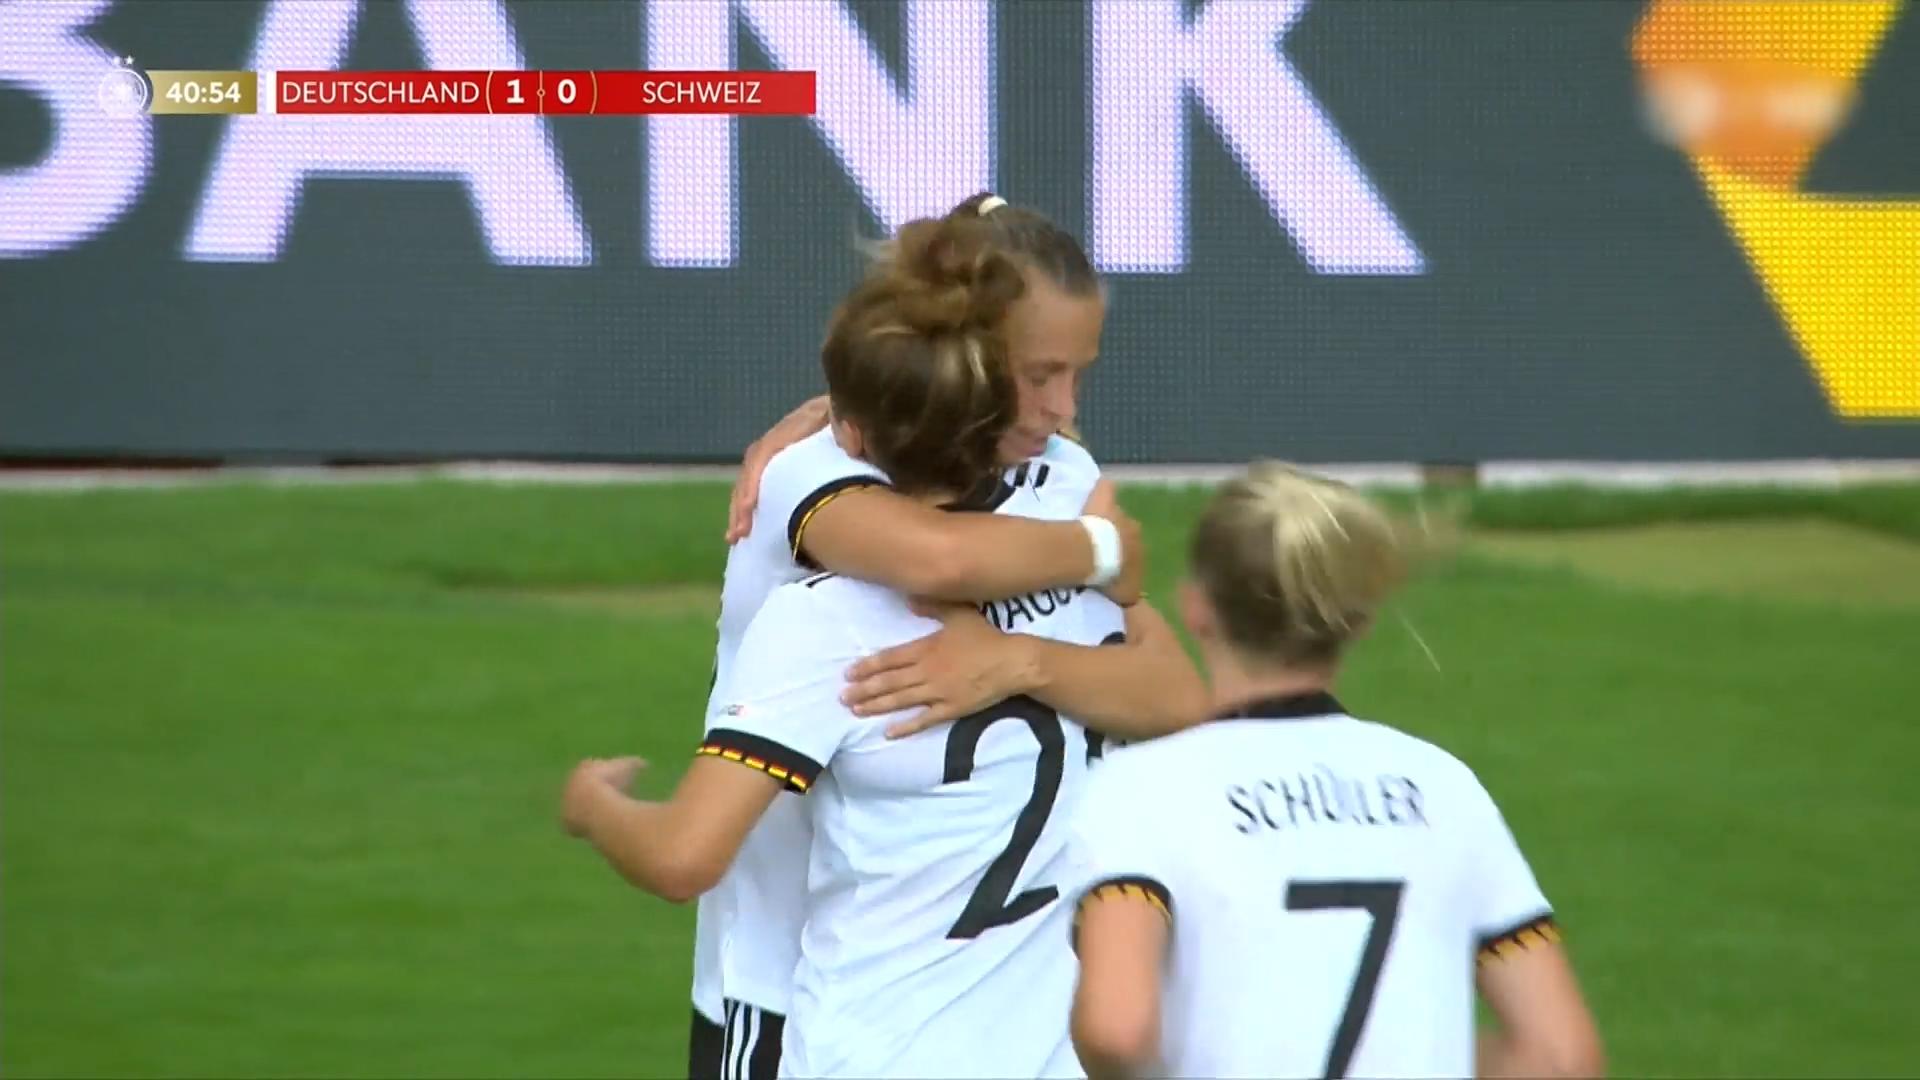 DFB women celebrate victory in EM dress rehearsal 7-0 swatter for Switzerland